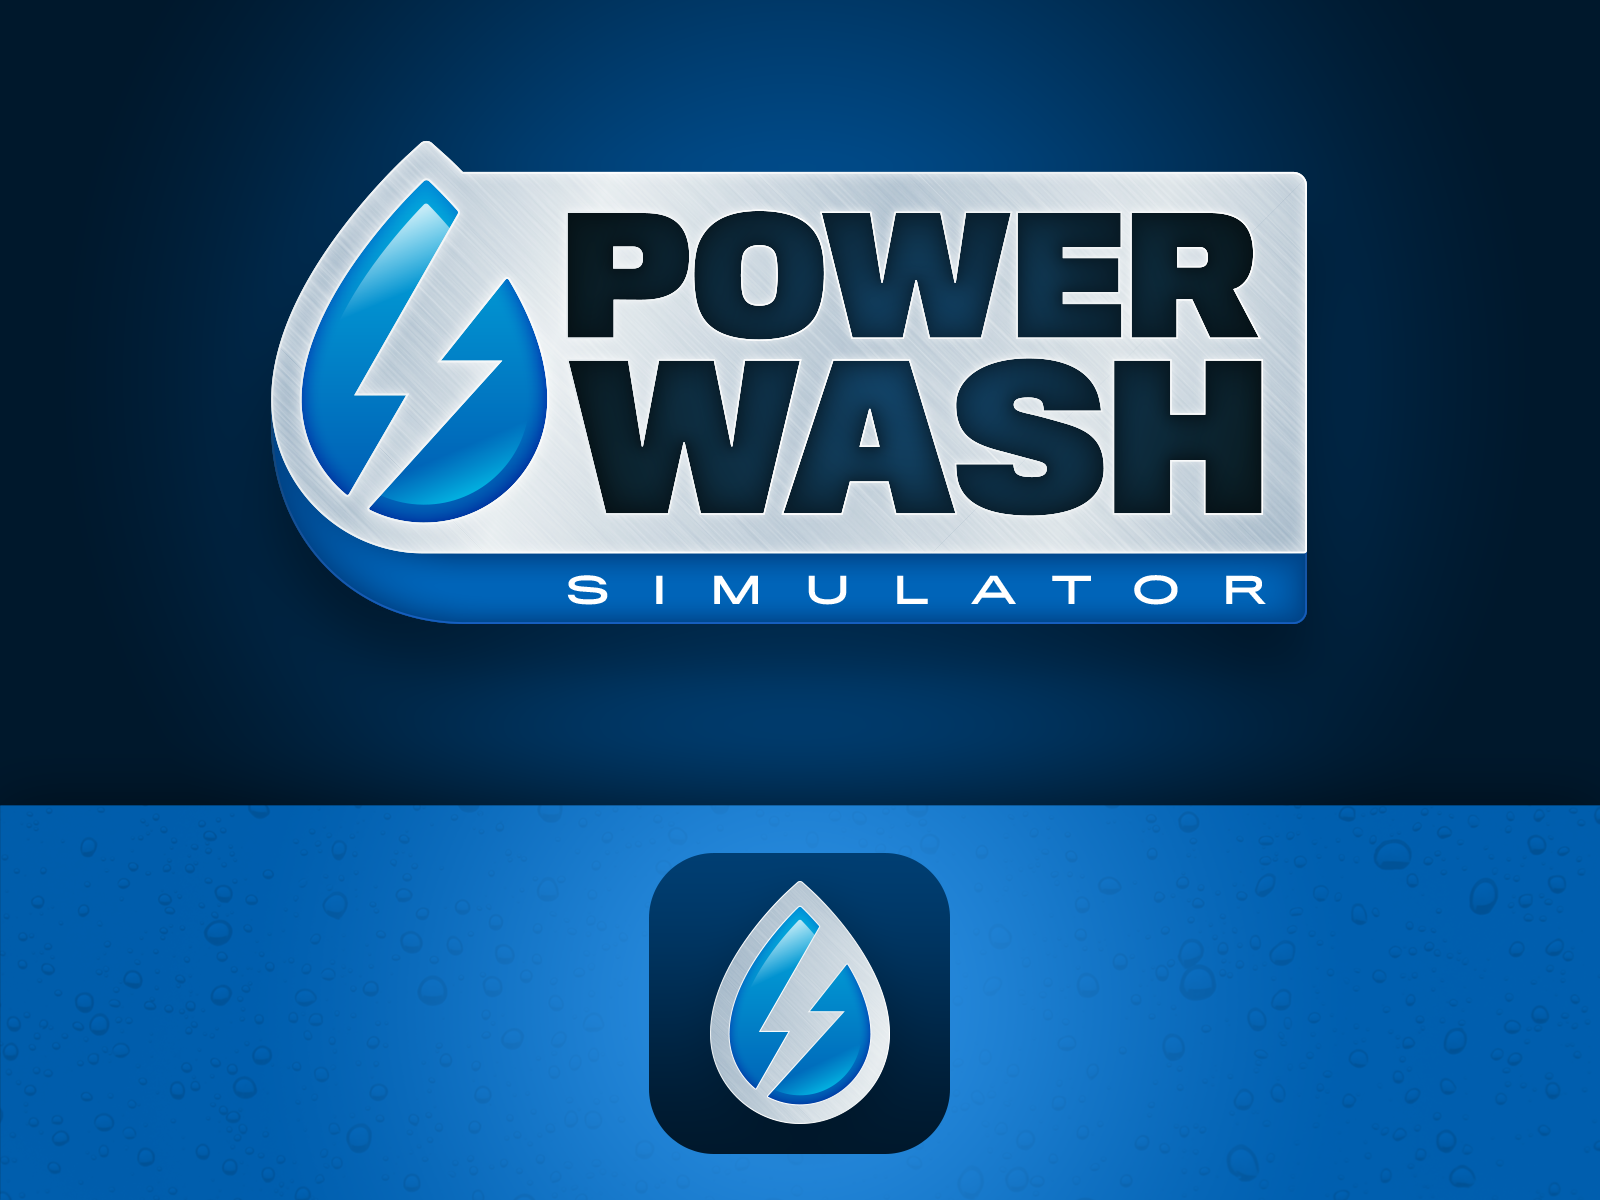 PowerWash Simulator Logo by Paul Simpson on Dribbble